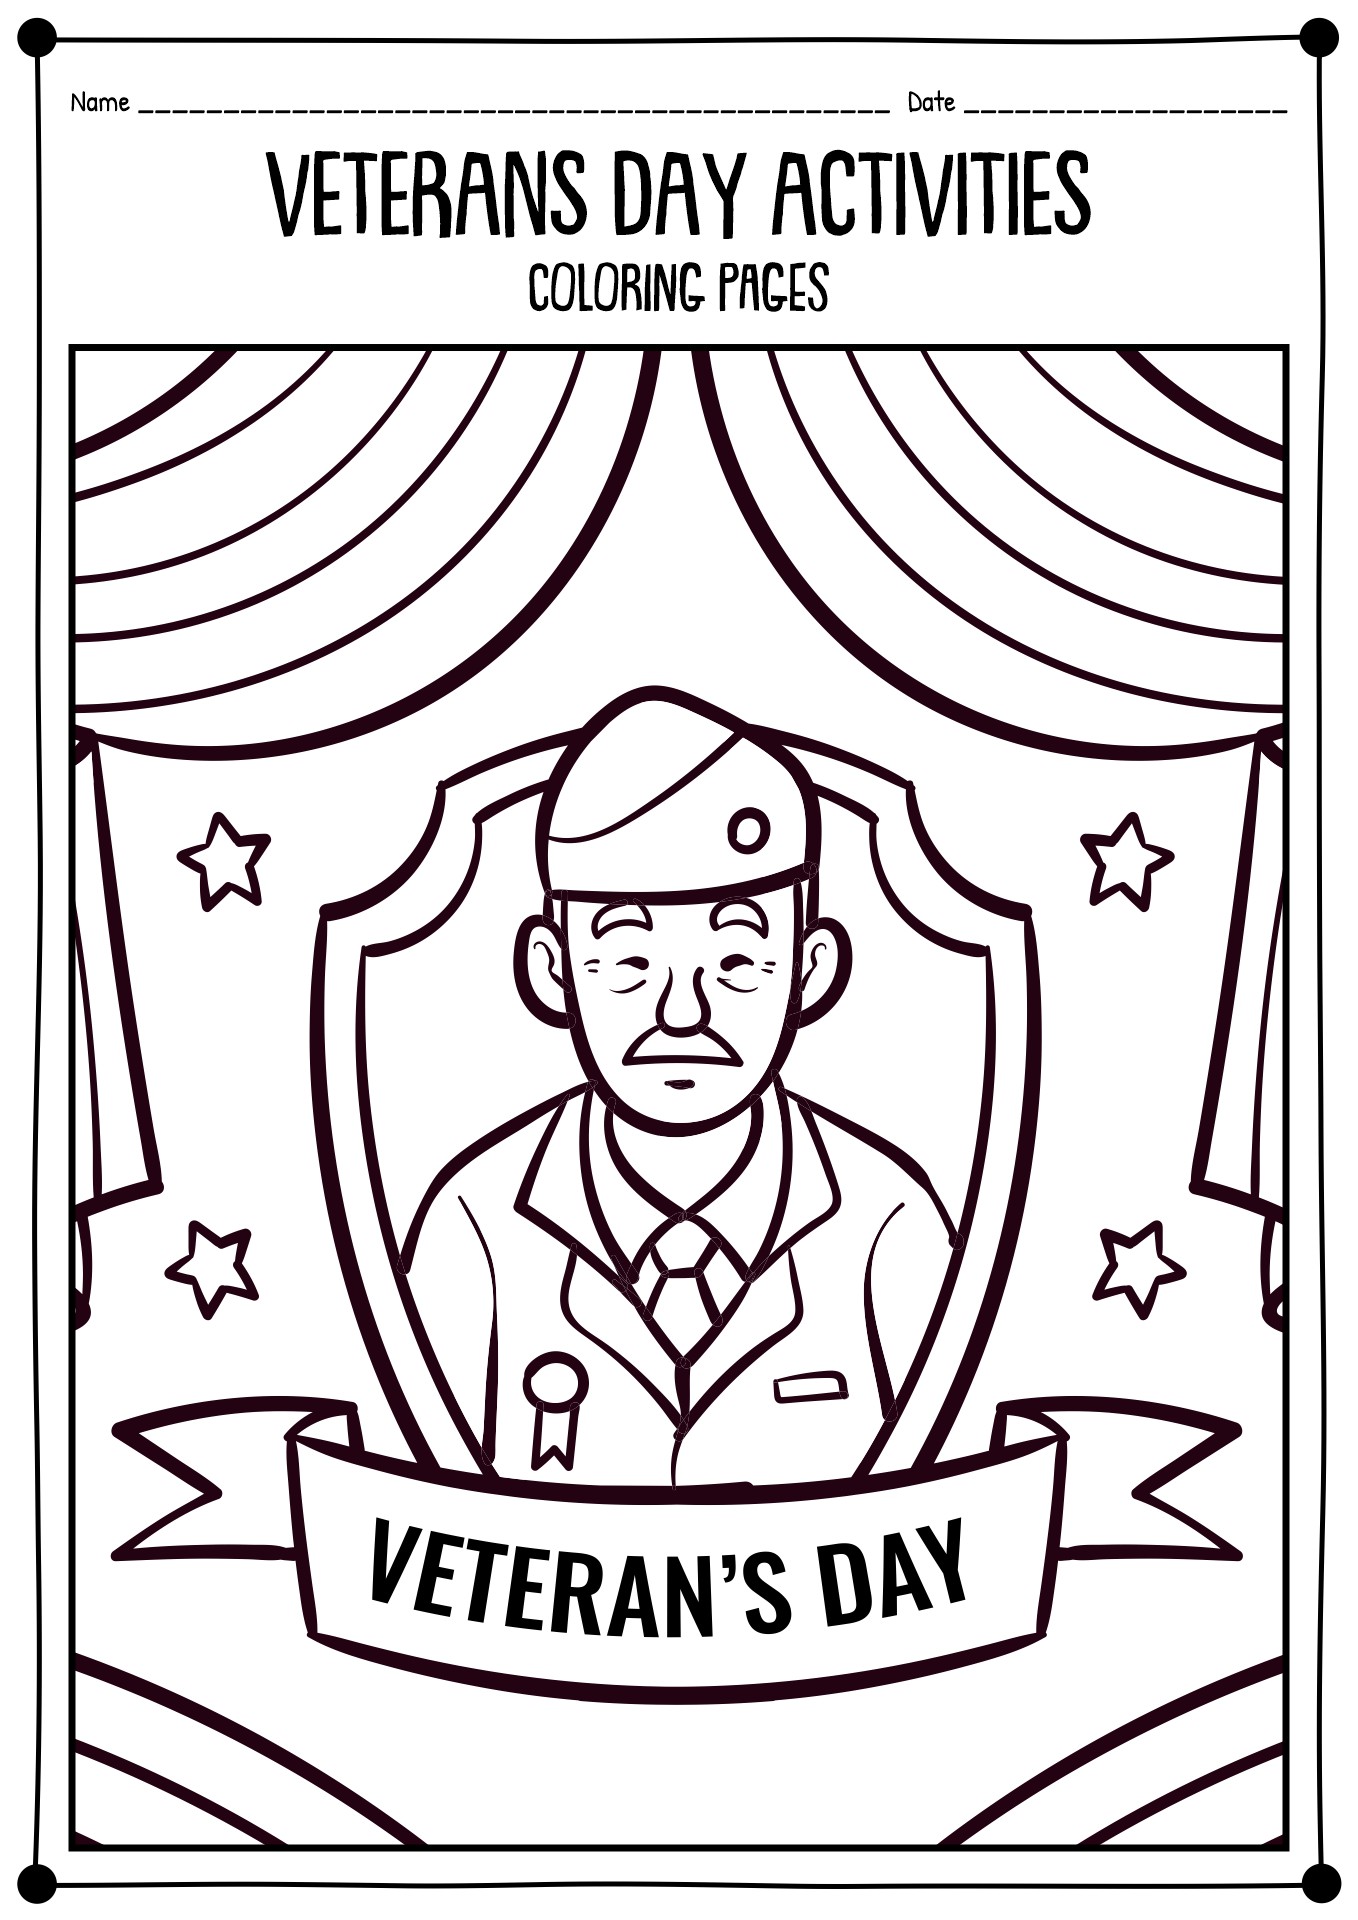 veterans-day-printable-activities-for-kids-99-printable